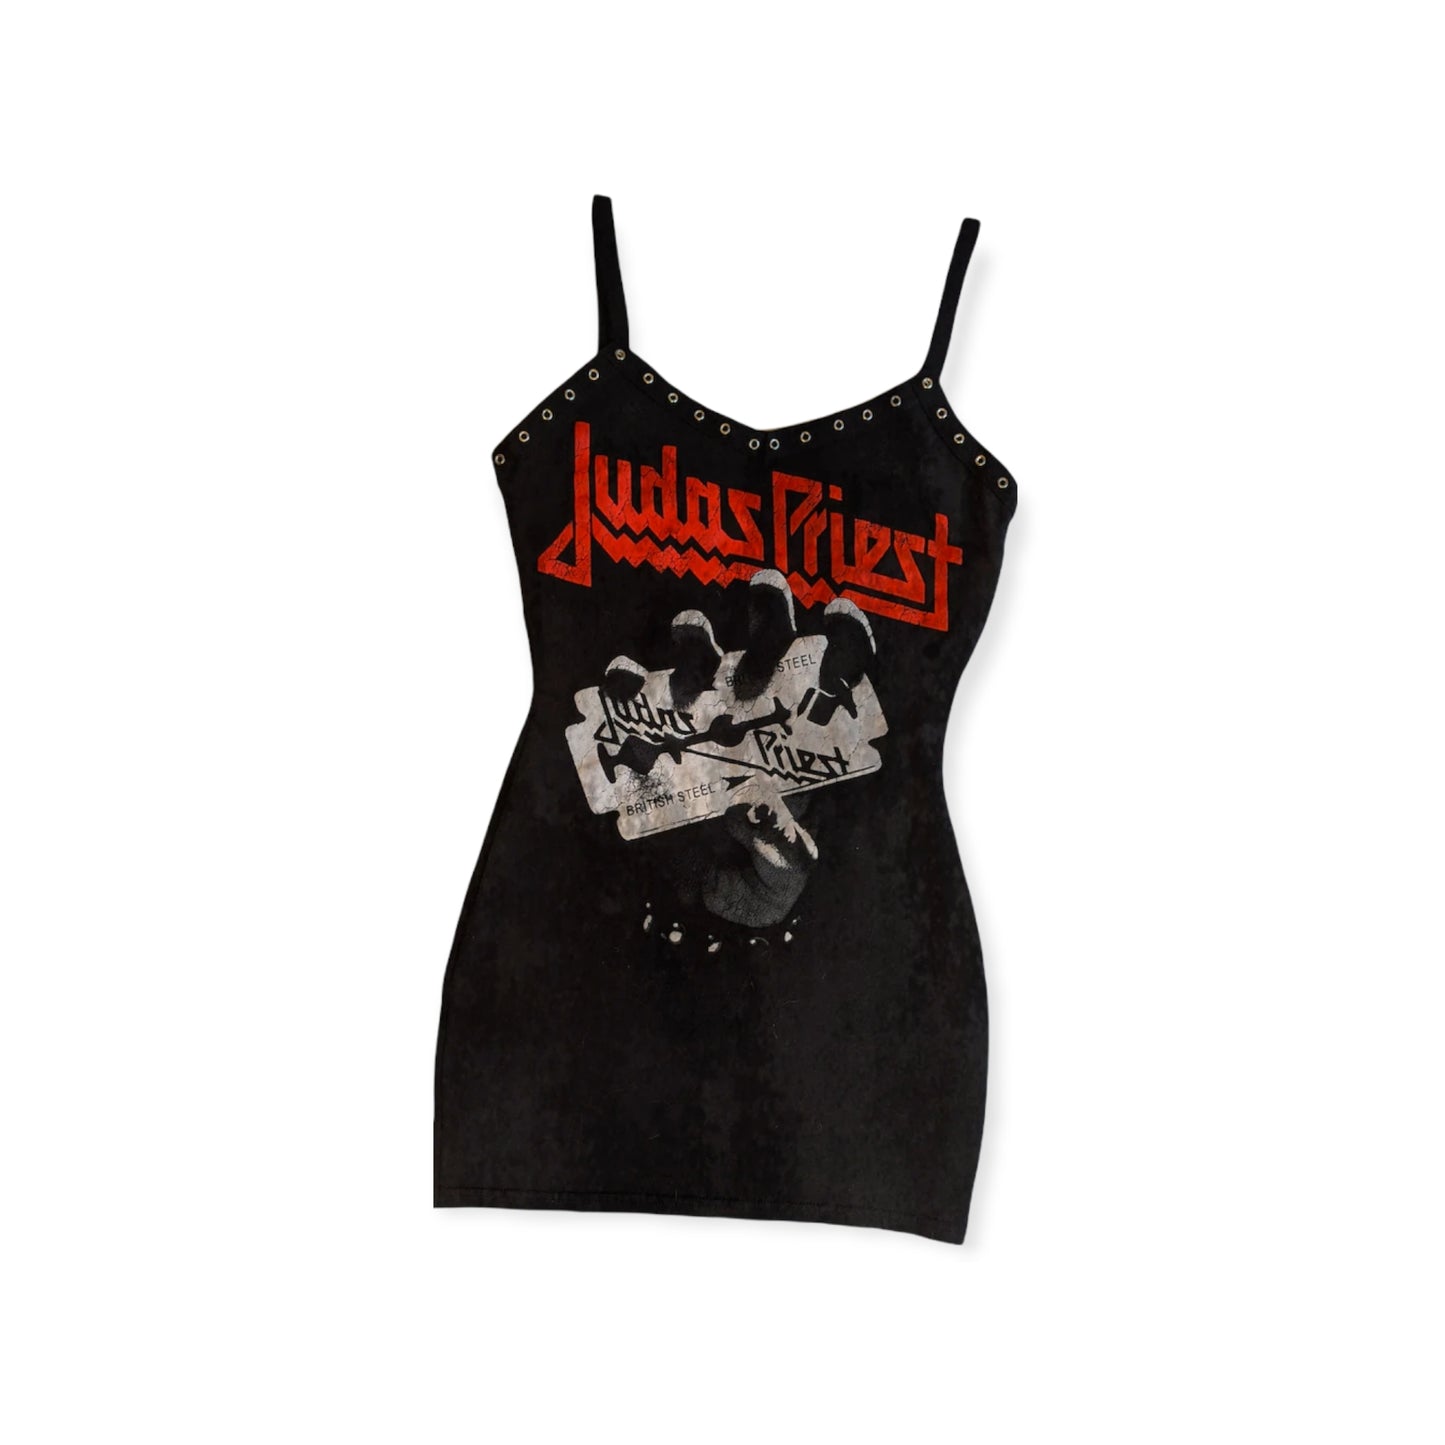 Judas Priest - British Steel dress